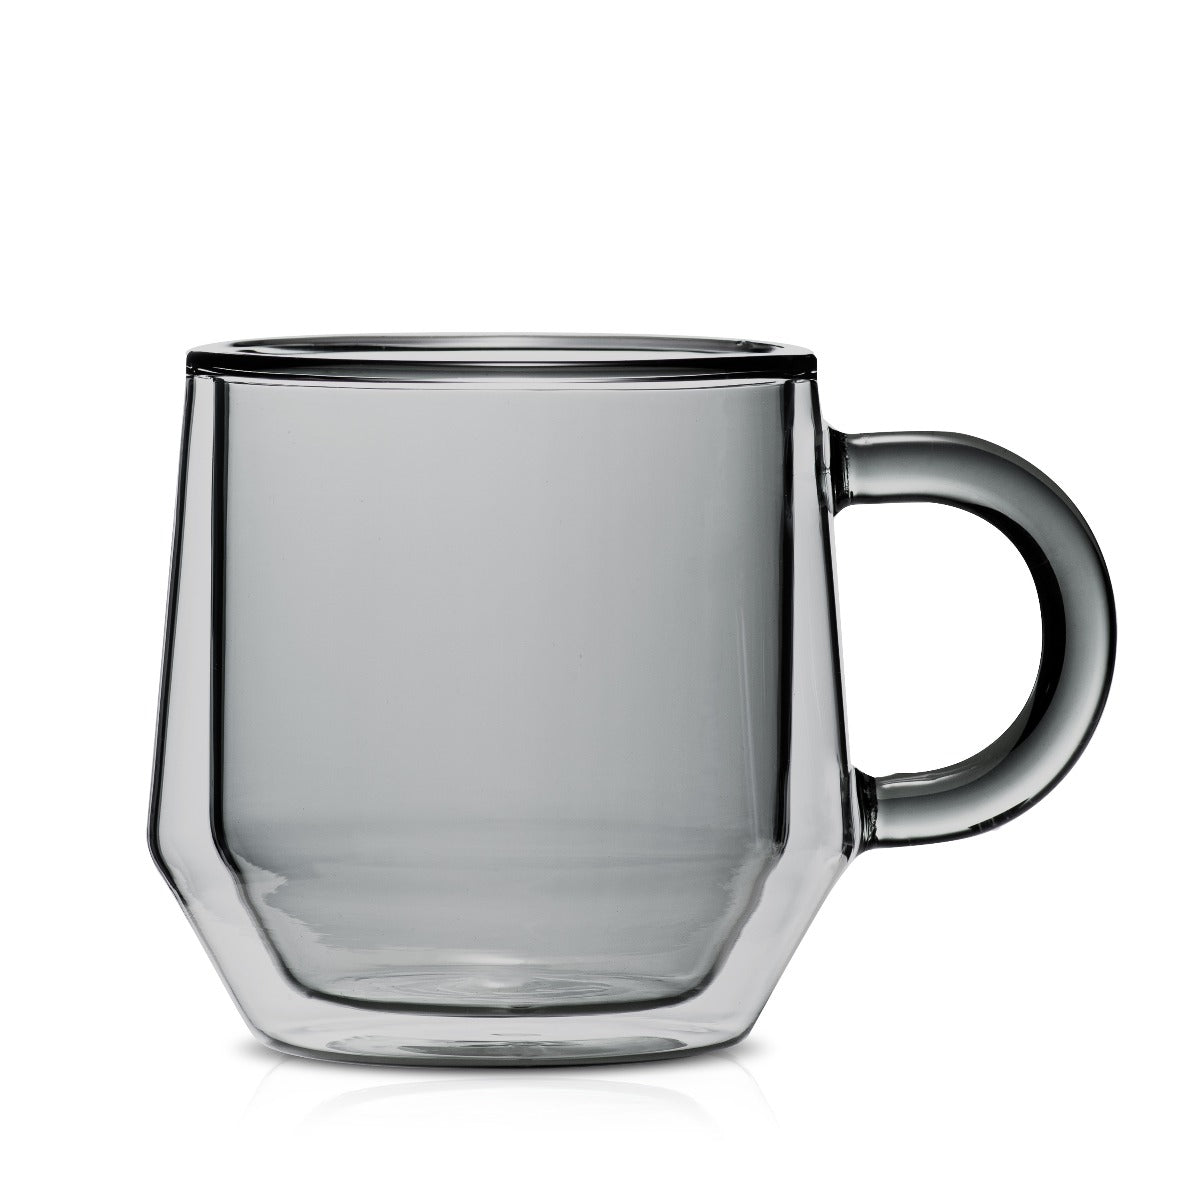 Hearth Double Wall Glass Mug, 240ml (8 oz) - Set of 2